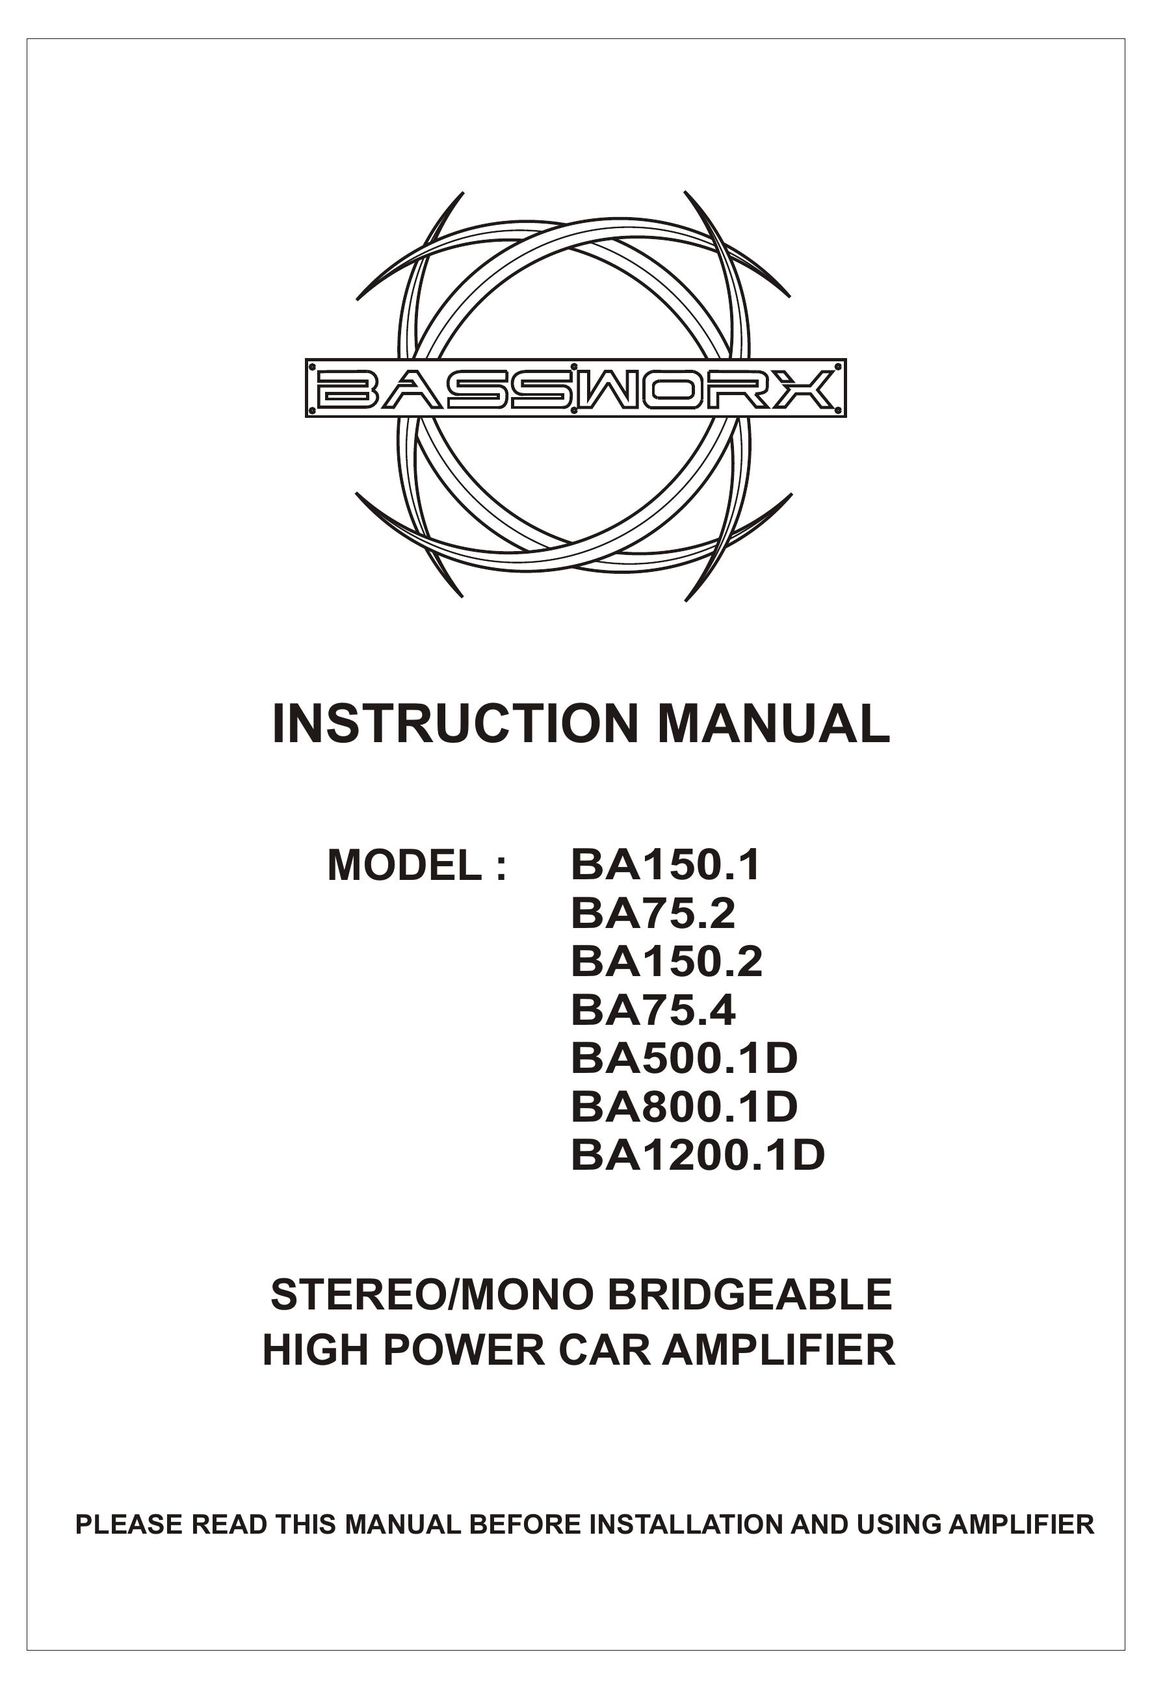 Bassworx BA800.1D Car Amplifier User Manual